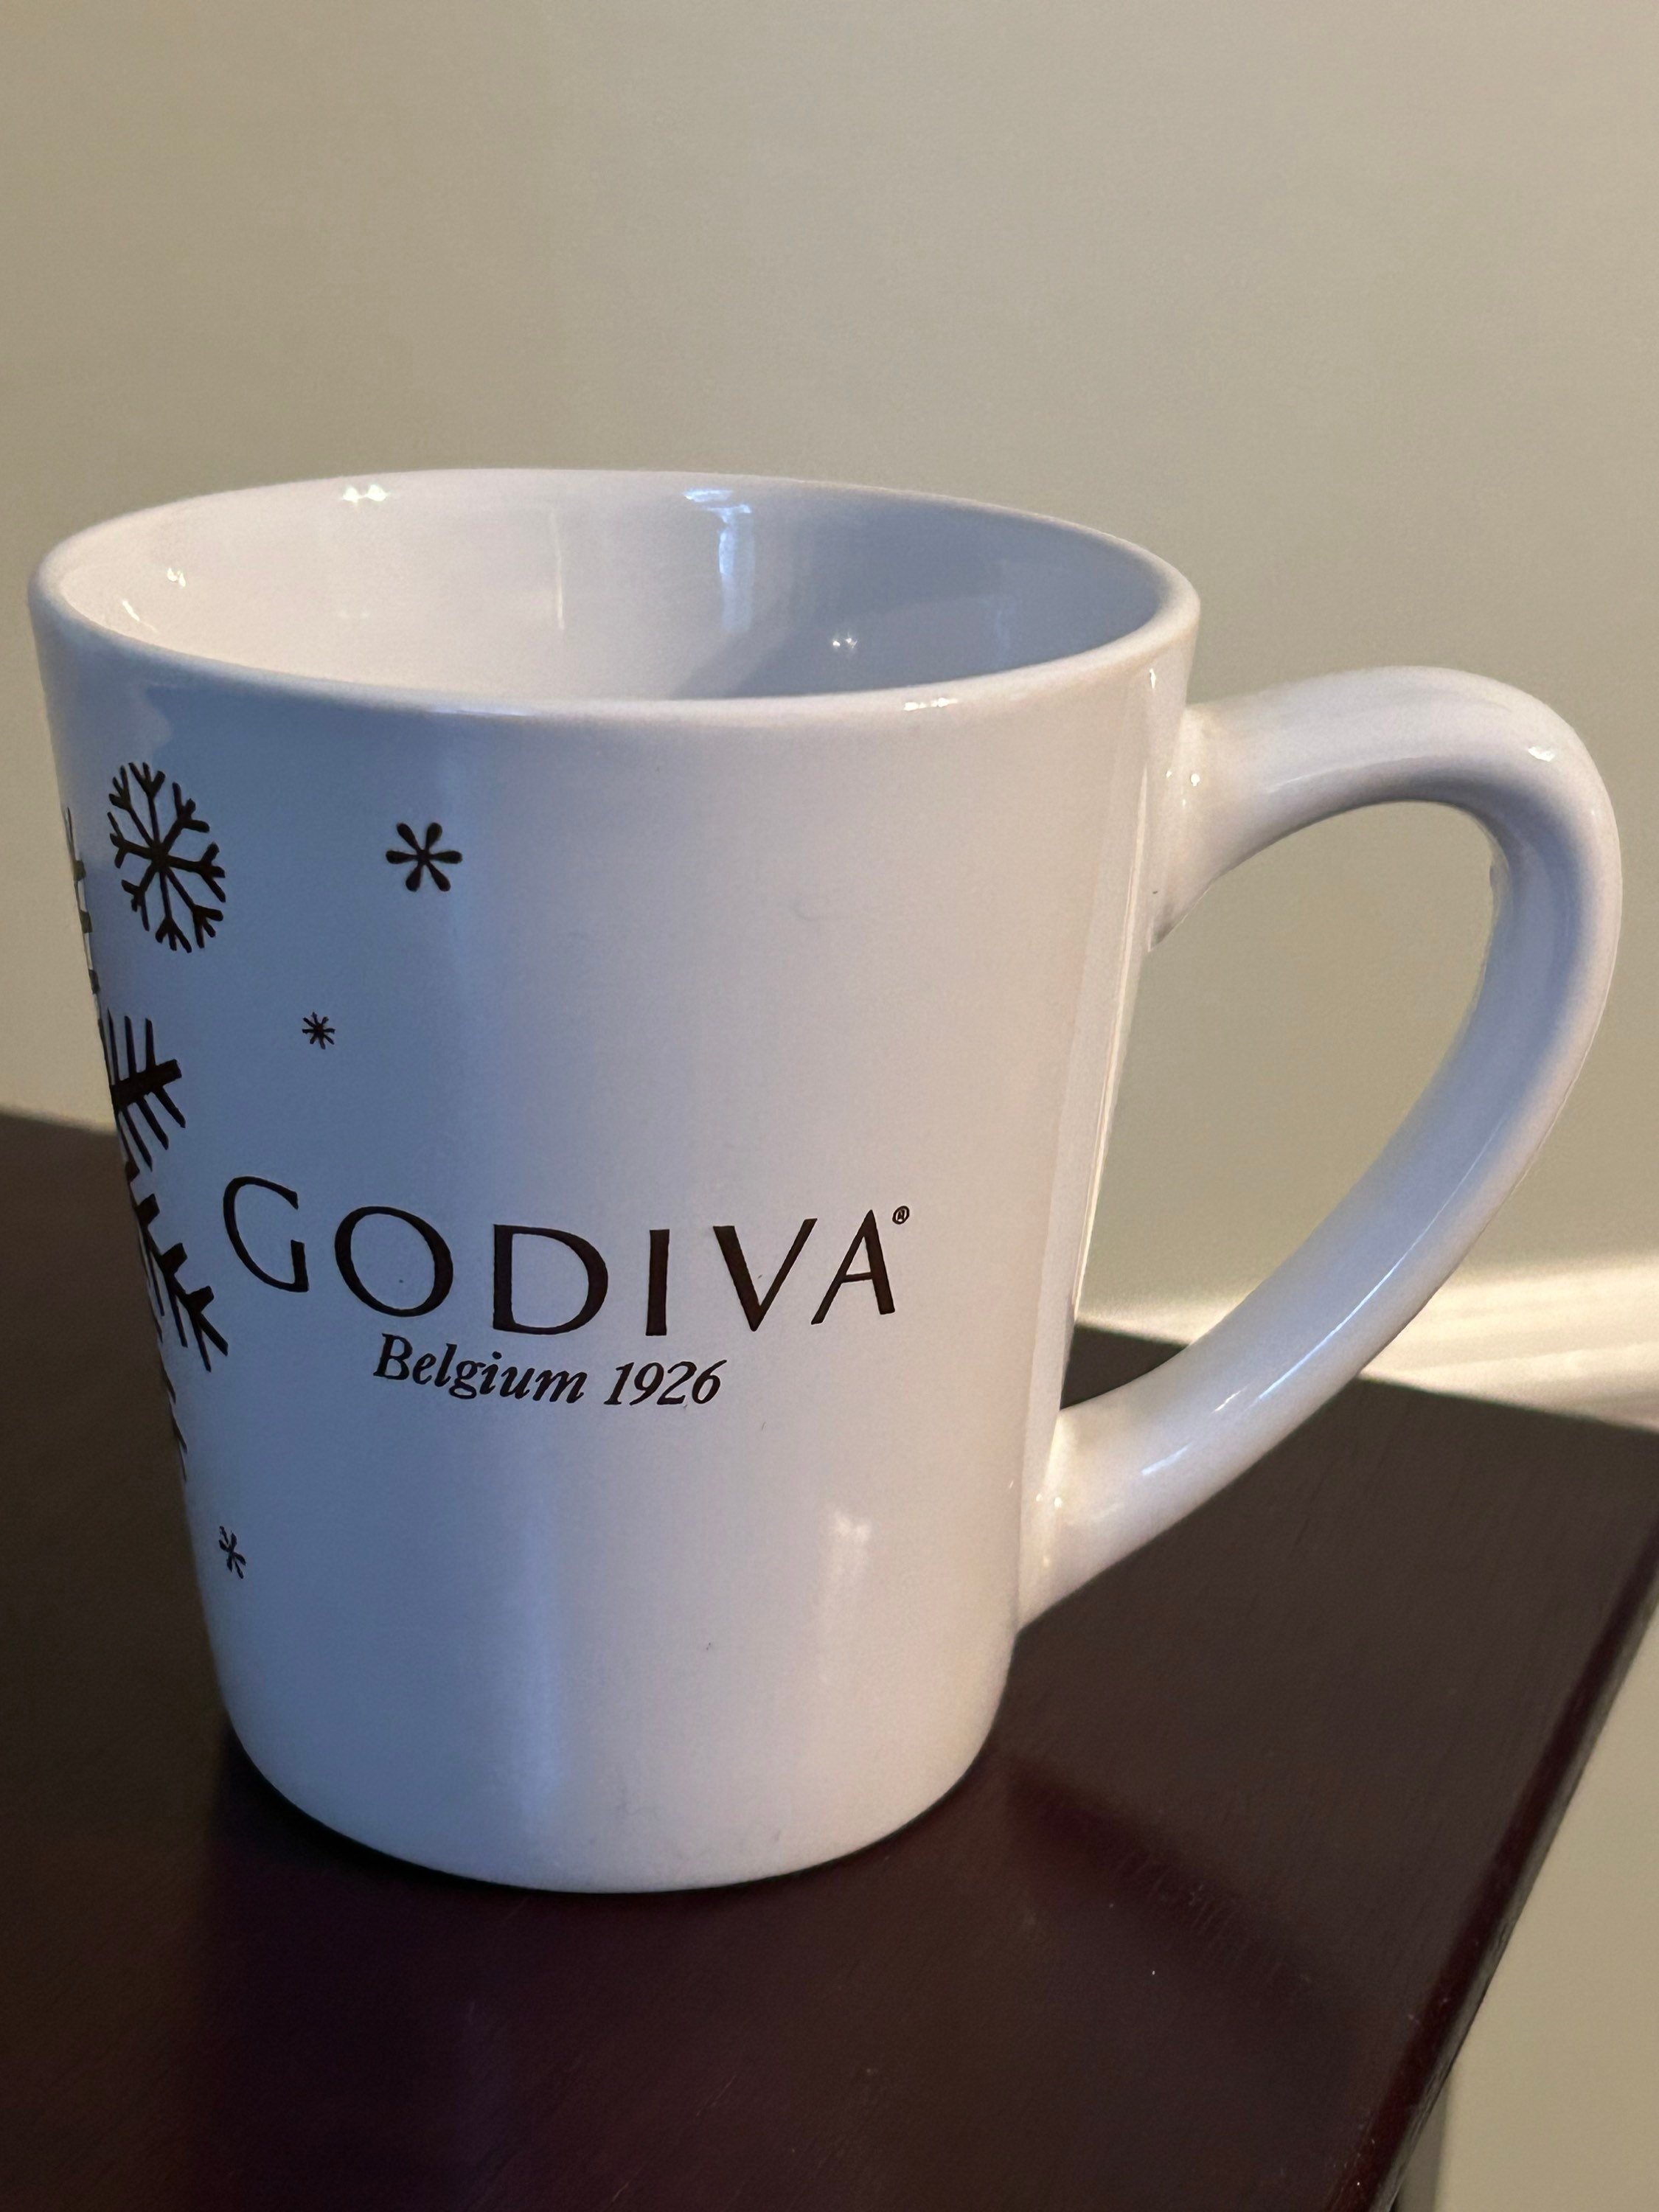 Godiva Barista Coffee Gift Set, Includes 2 Ceramic Logo Mugs